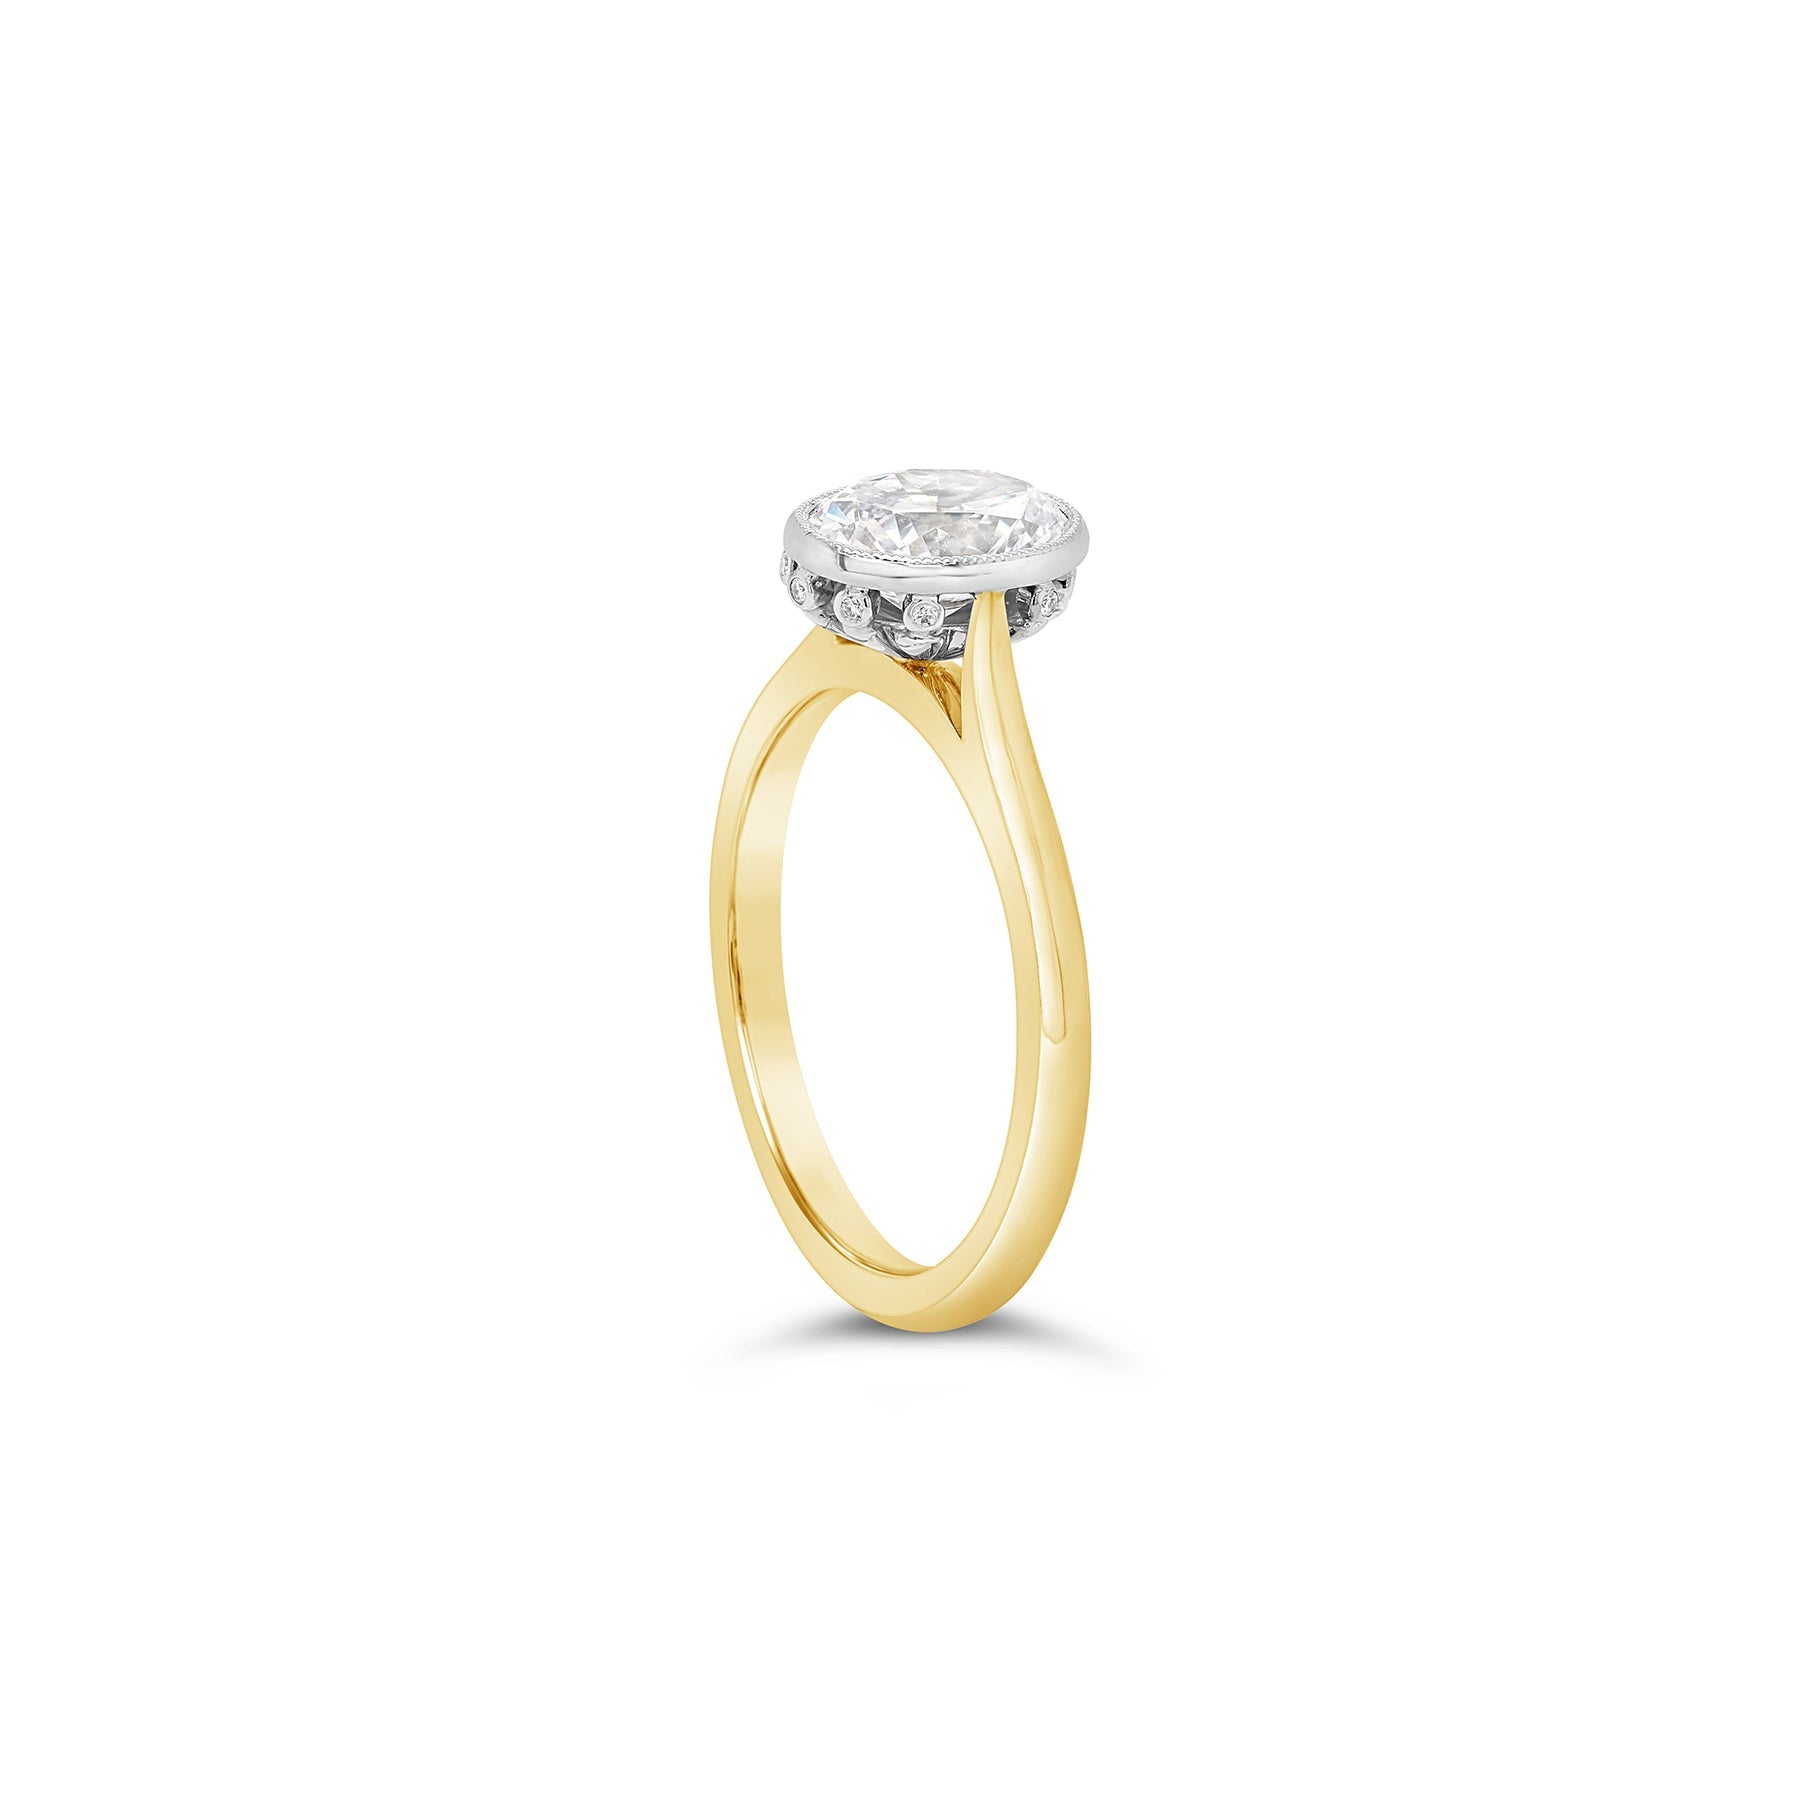 Oval Cut Bezel set Diamond Engagement Ring yellow gold